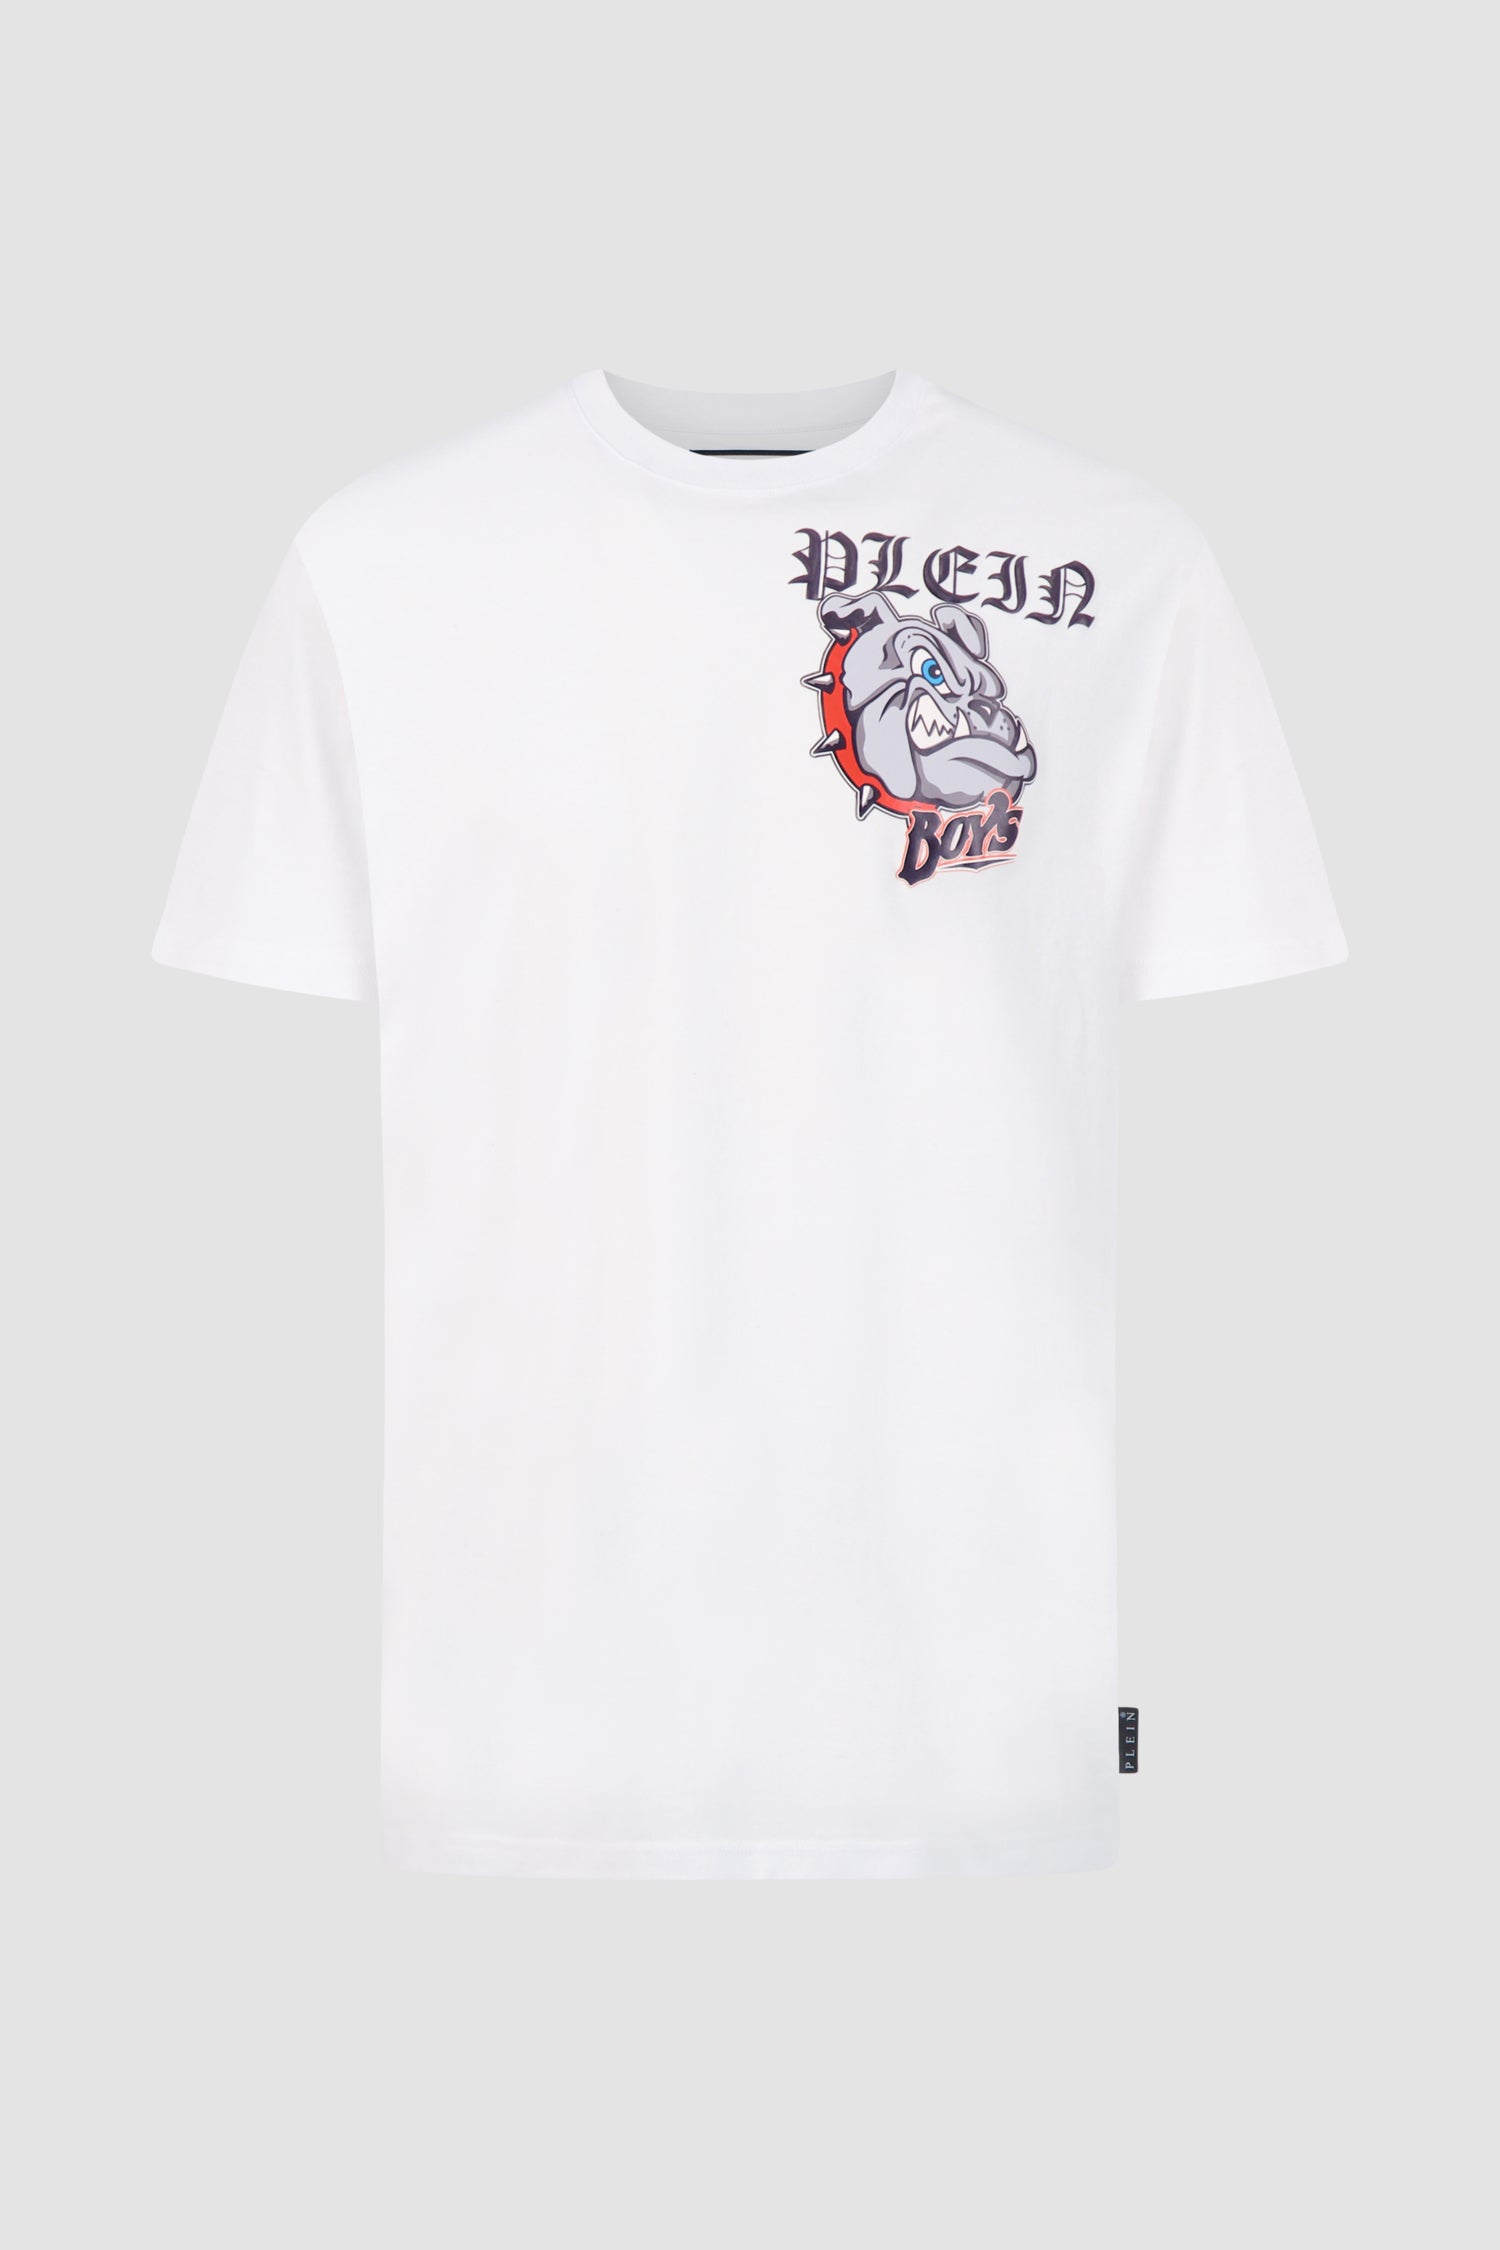 Philipp Plein White Round Neck SS Bulldogs T-Shirt